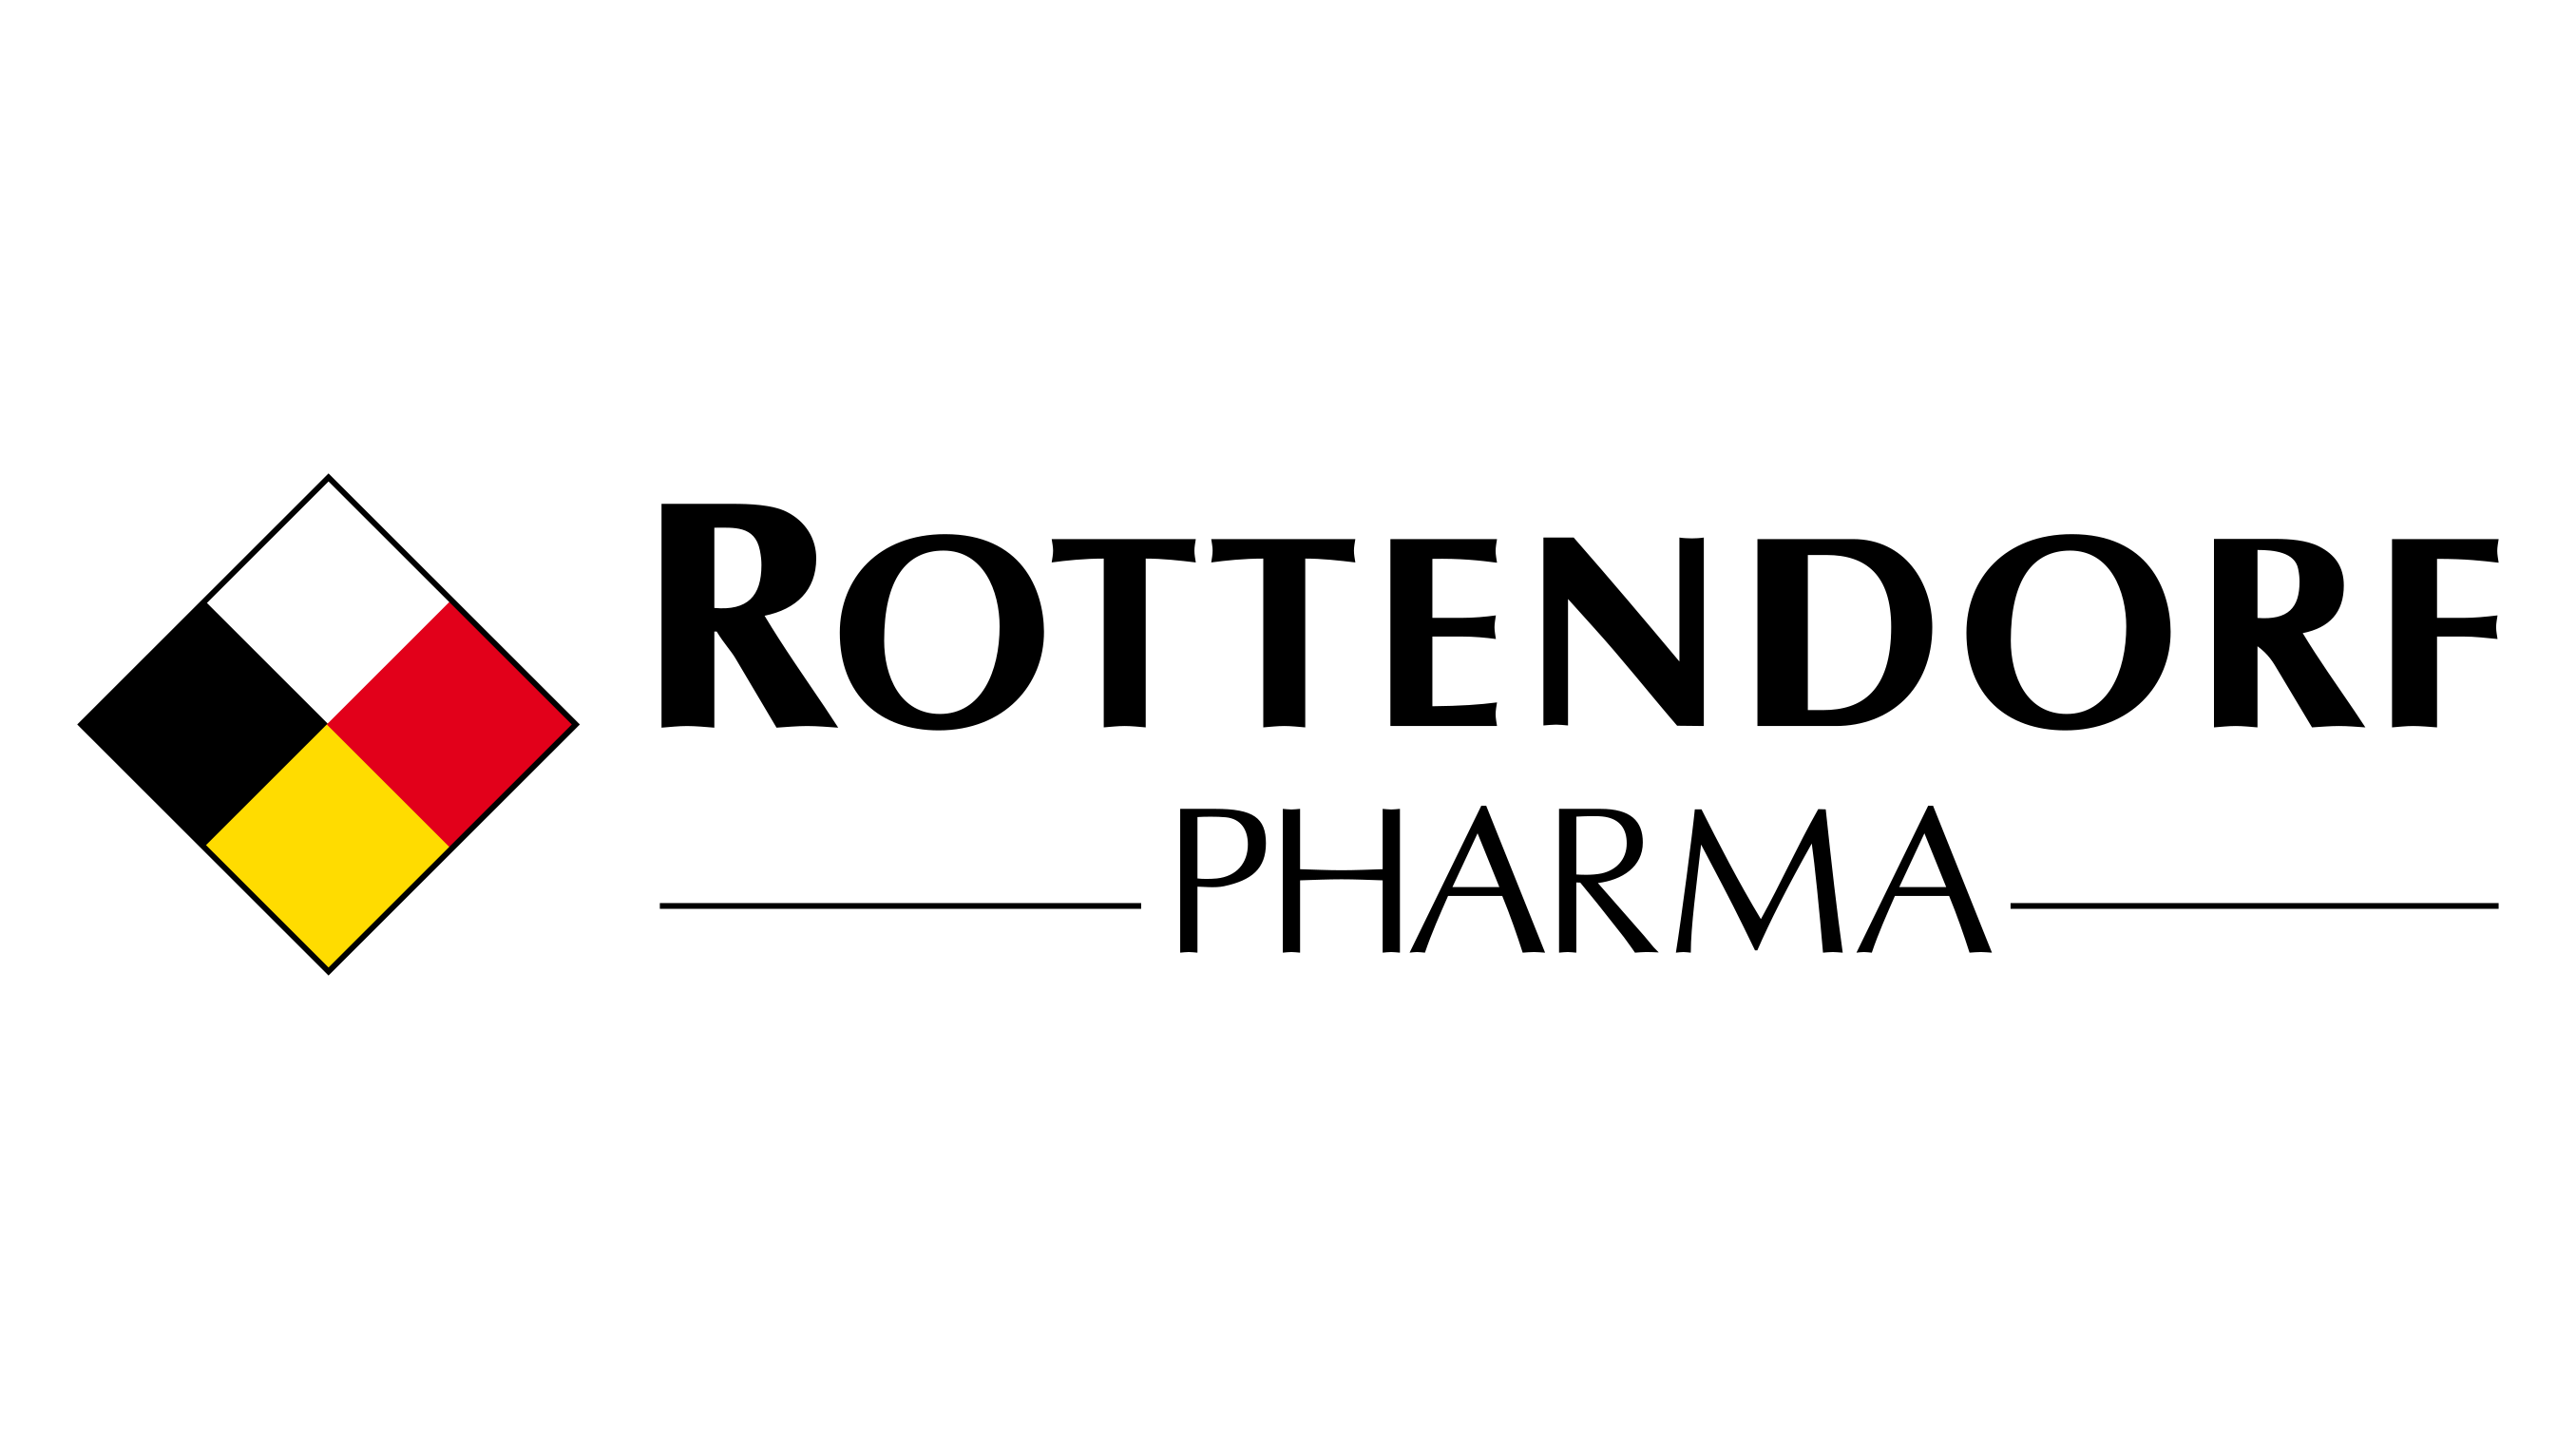 Rottendorf Pharma logo